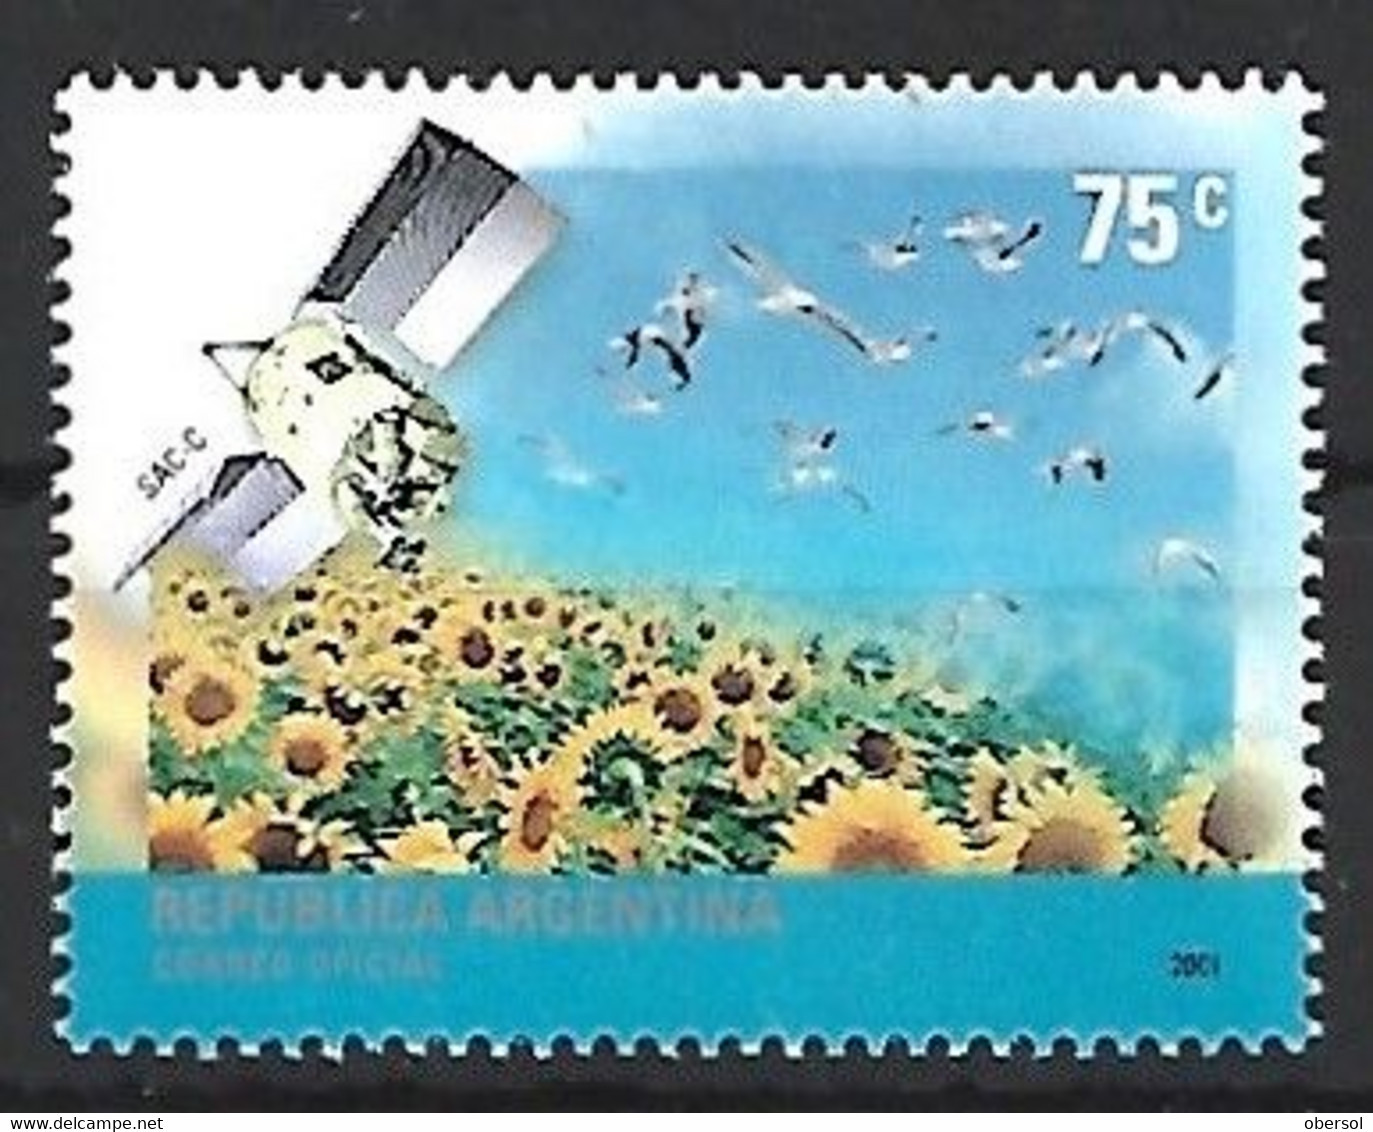 Argentina 2001 Satelites Flowers Birds Energy MNH Stamp - Nuevos